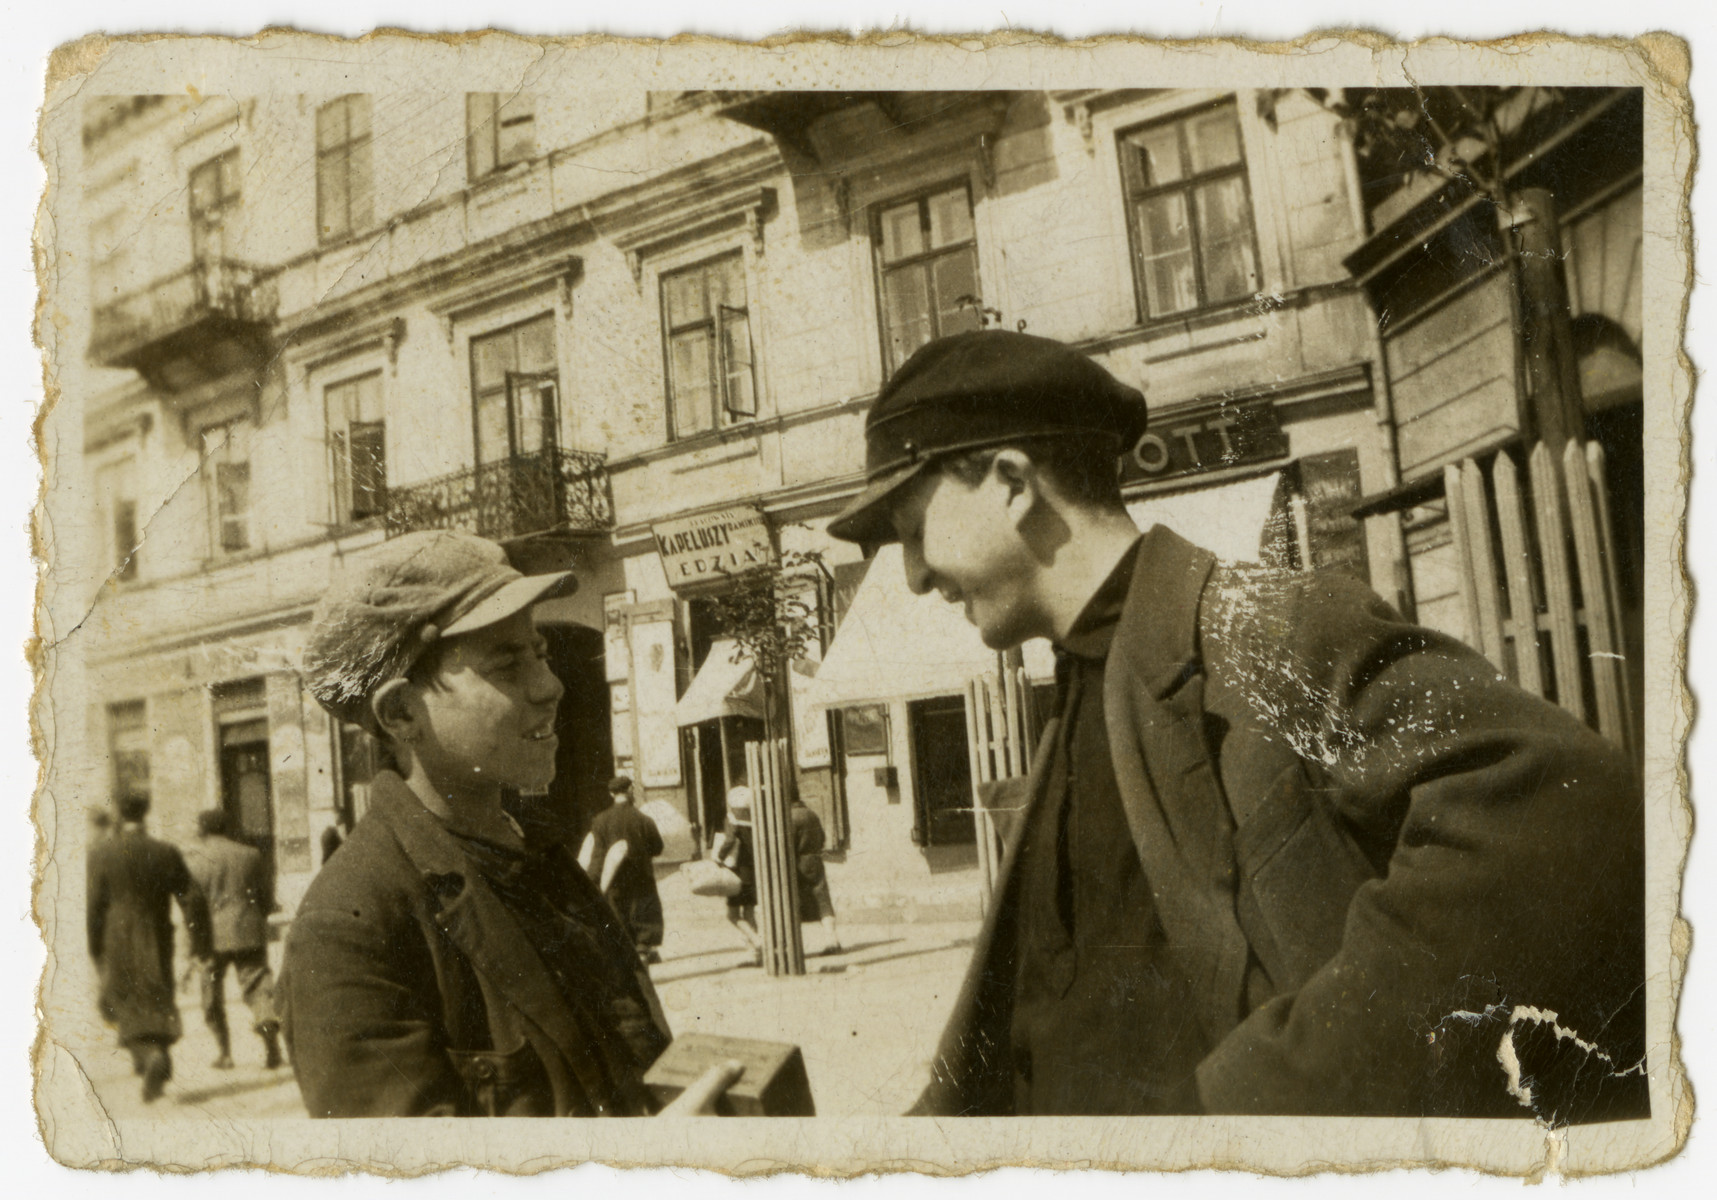 Mendel Grosman (right) talks to a friend on a street in Lodz.